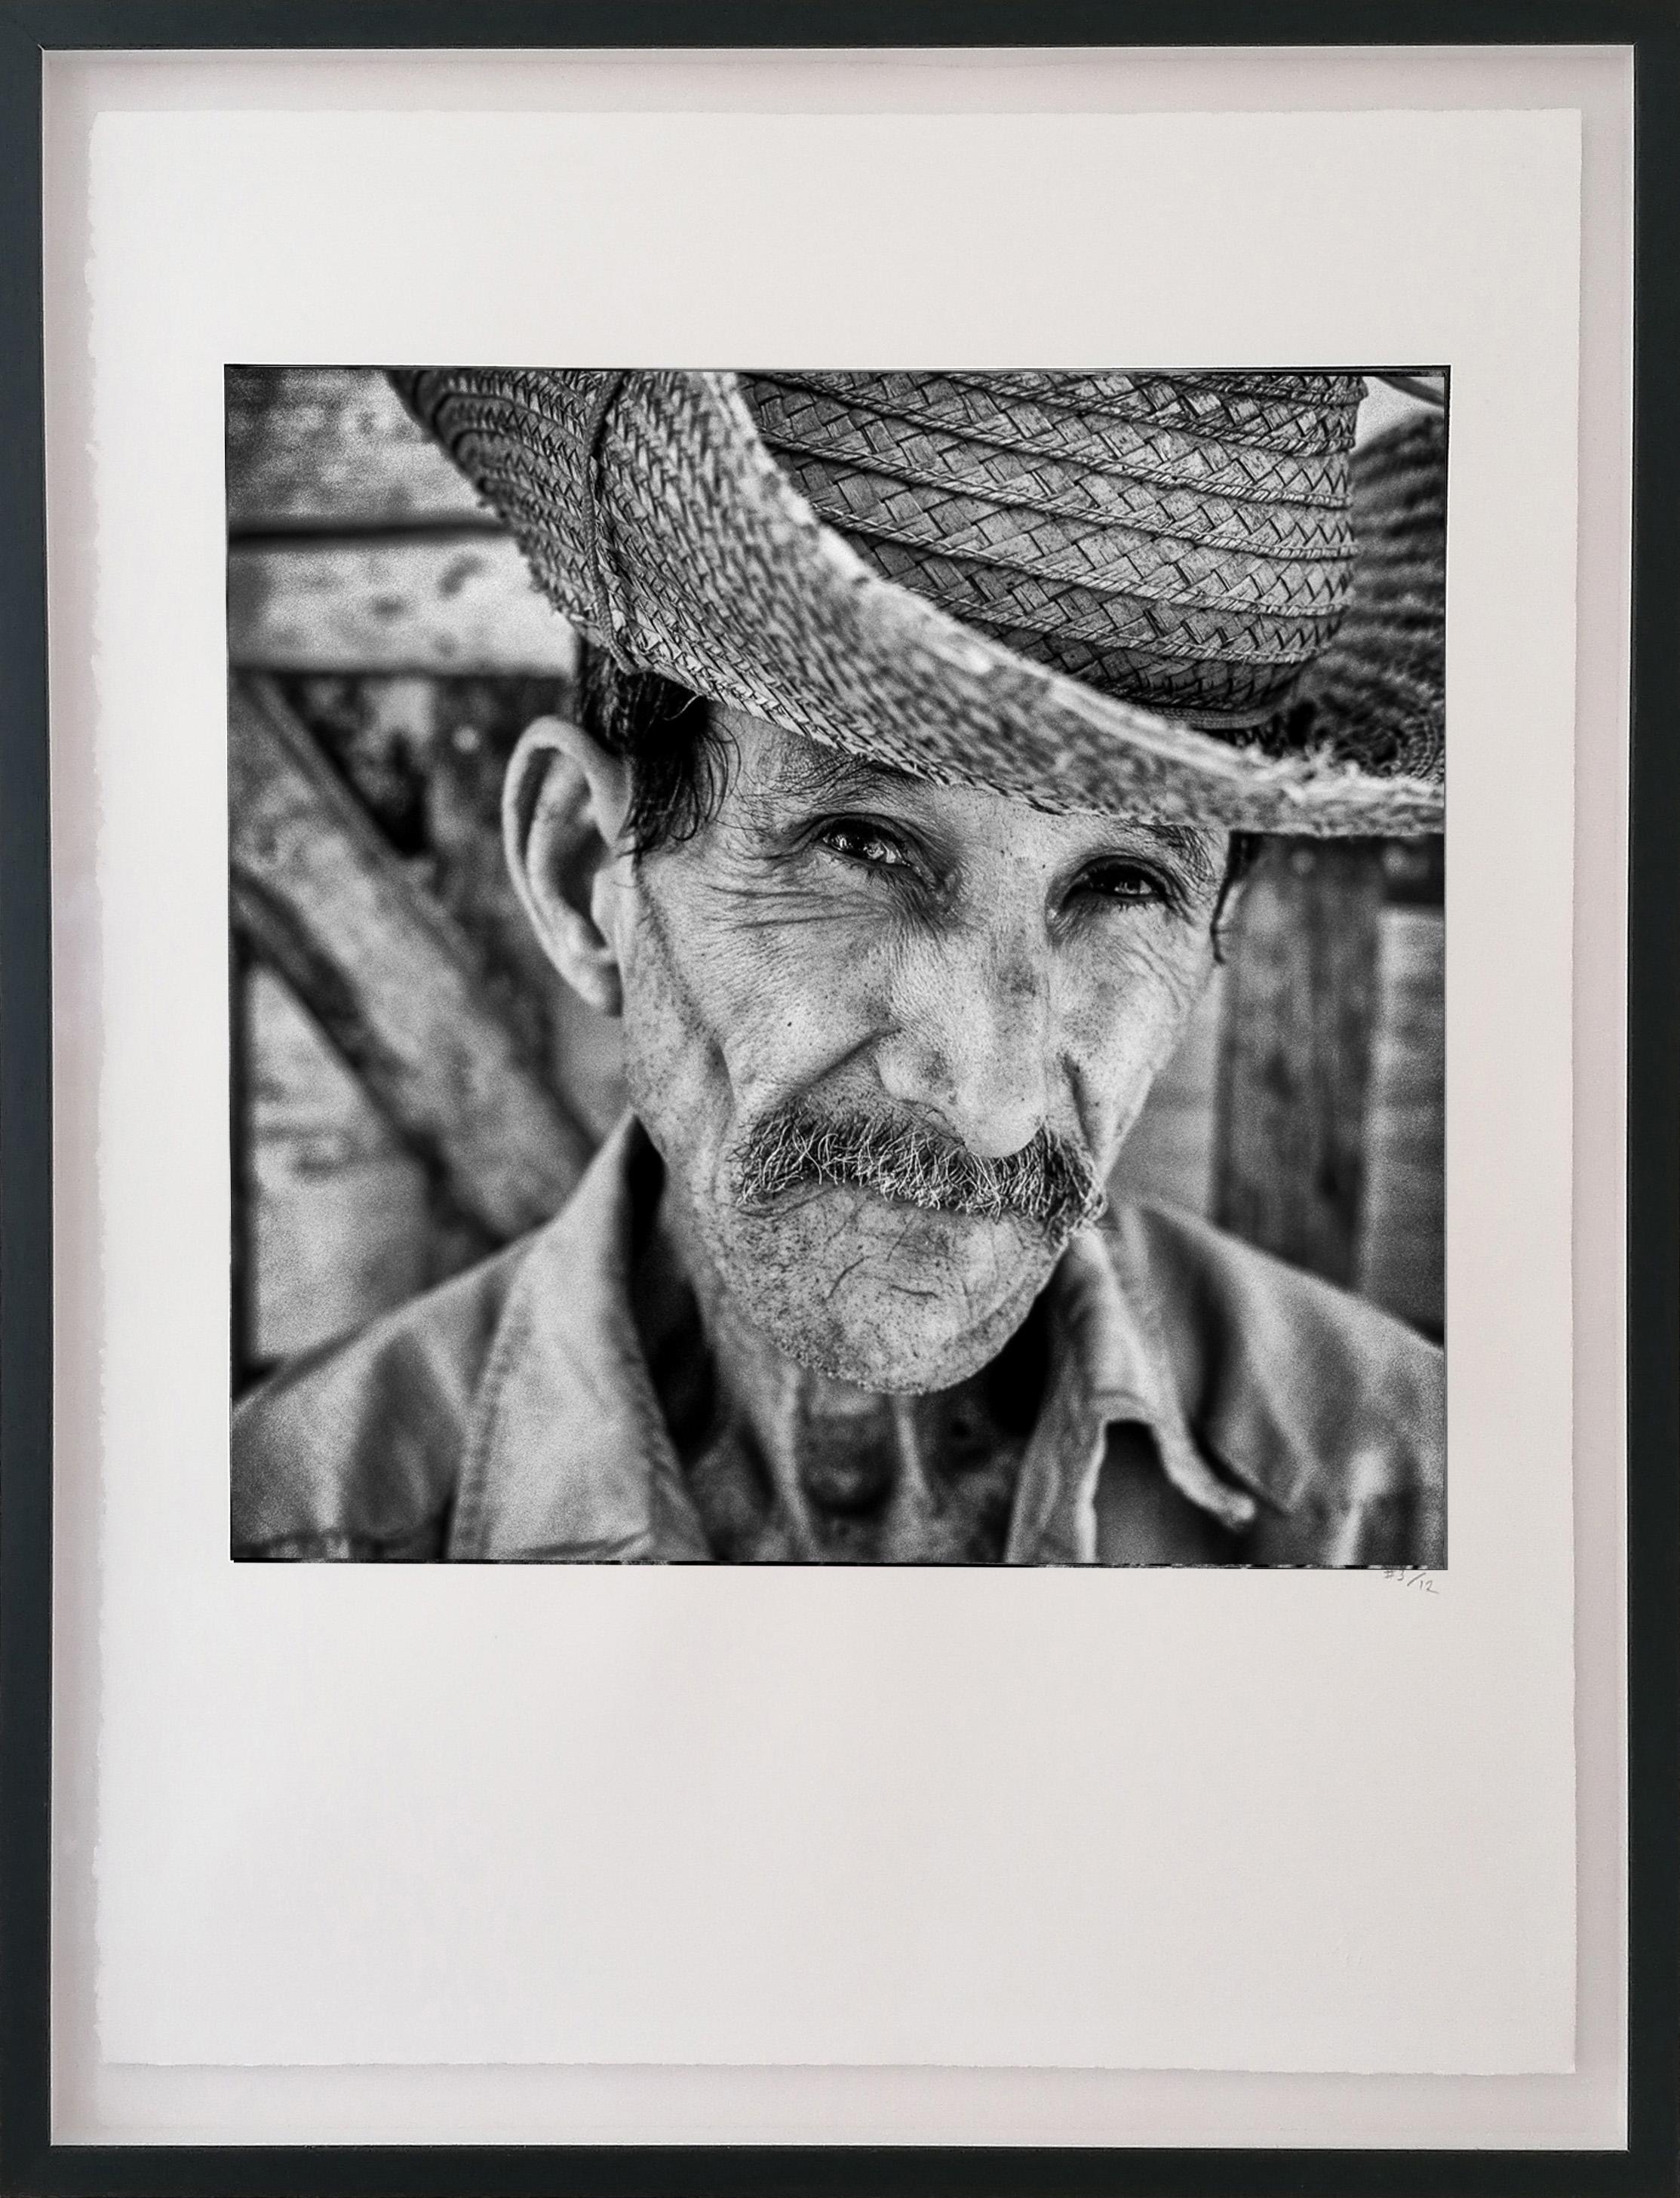 El Campesino by James Sparshatt - Palladium Platinum Photograph, 2001